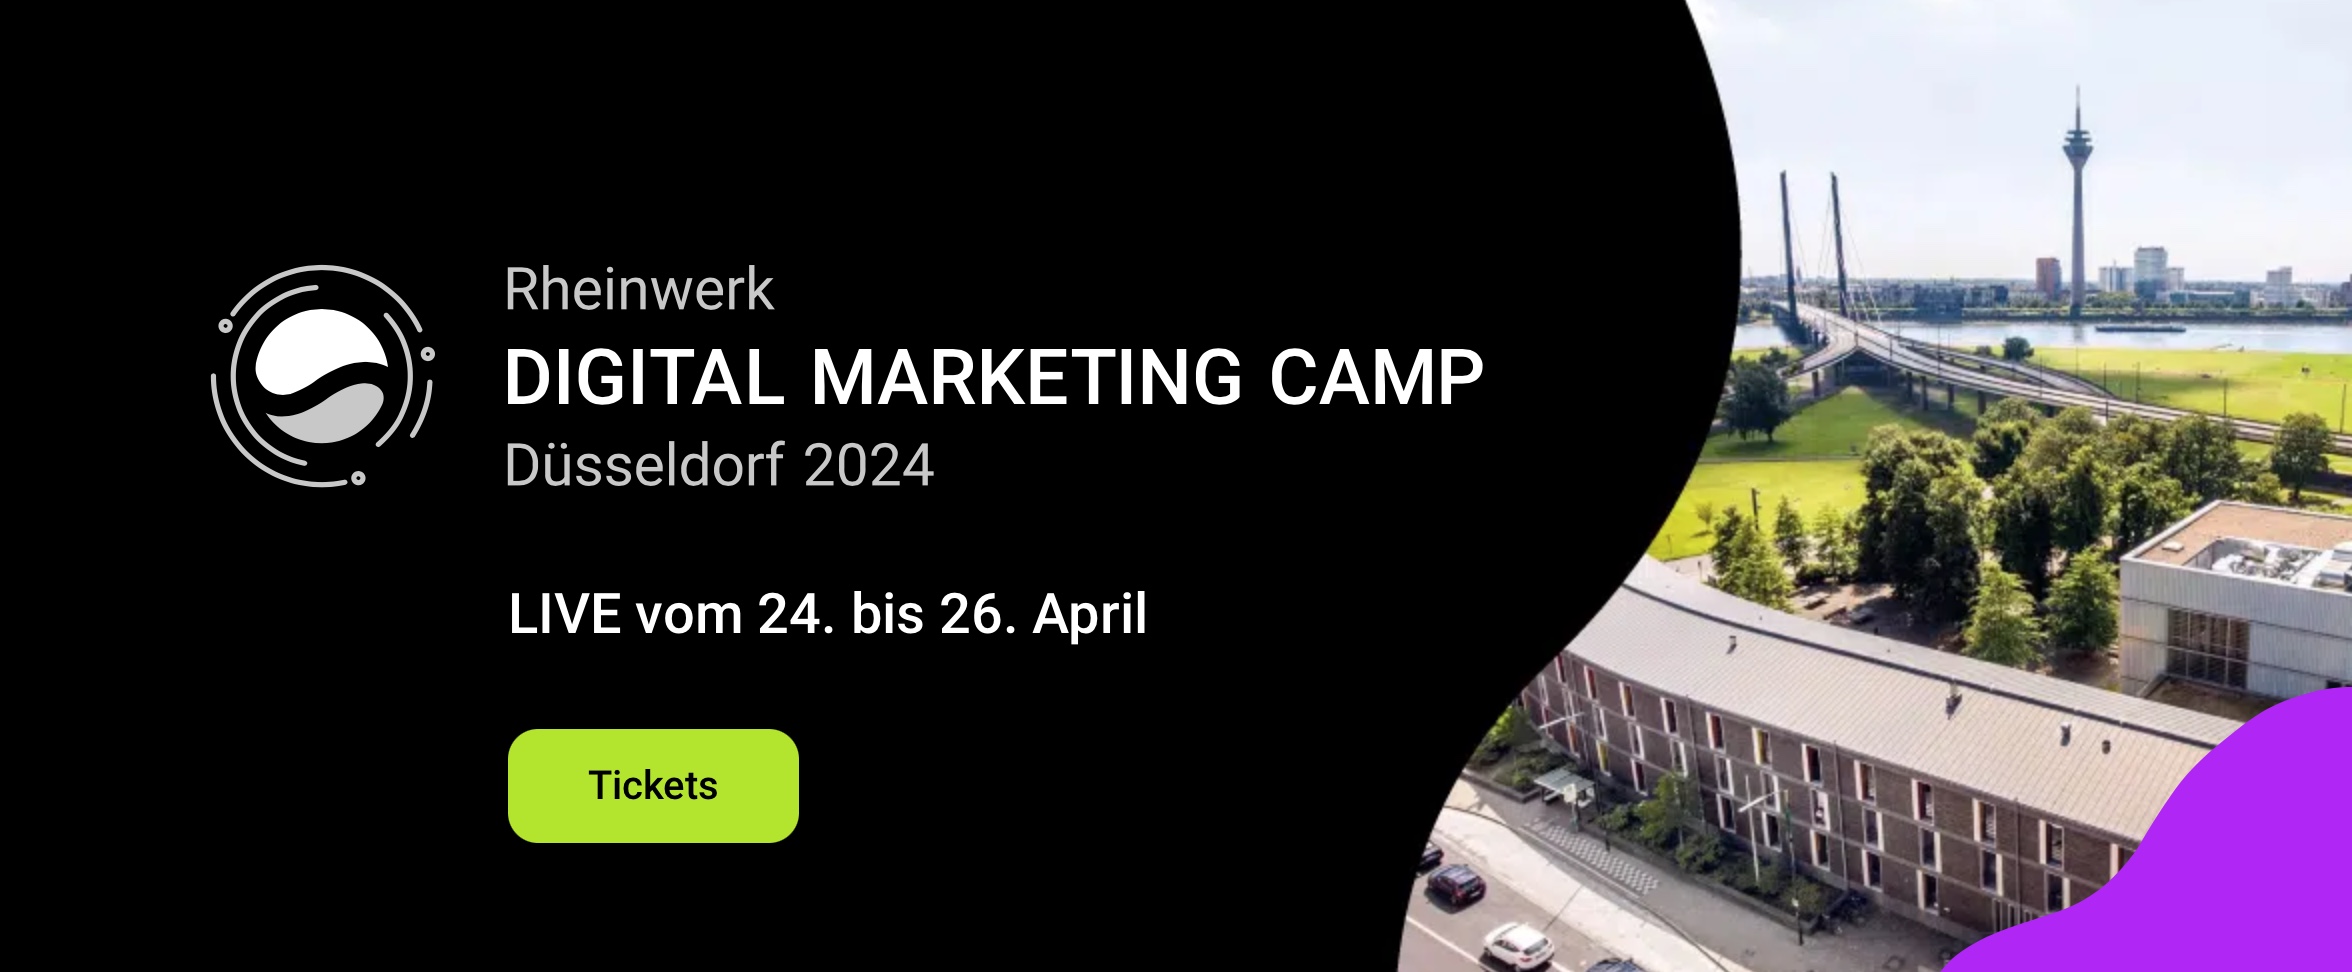 Marketing Camp Rheinwerk DMC